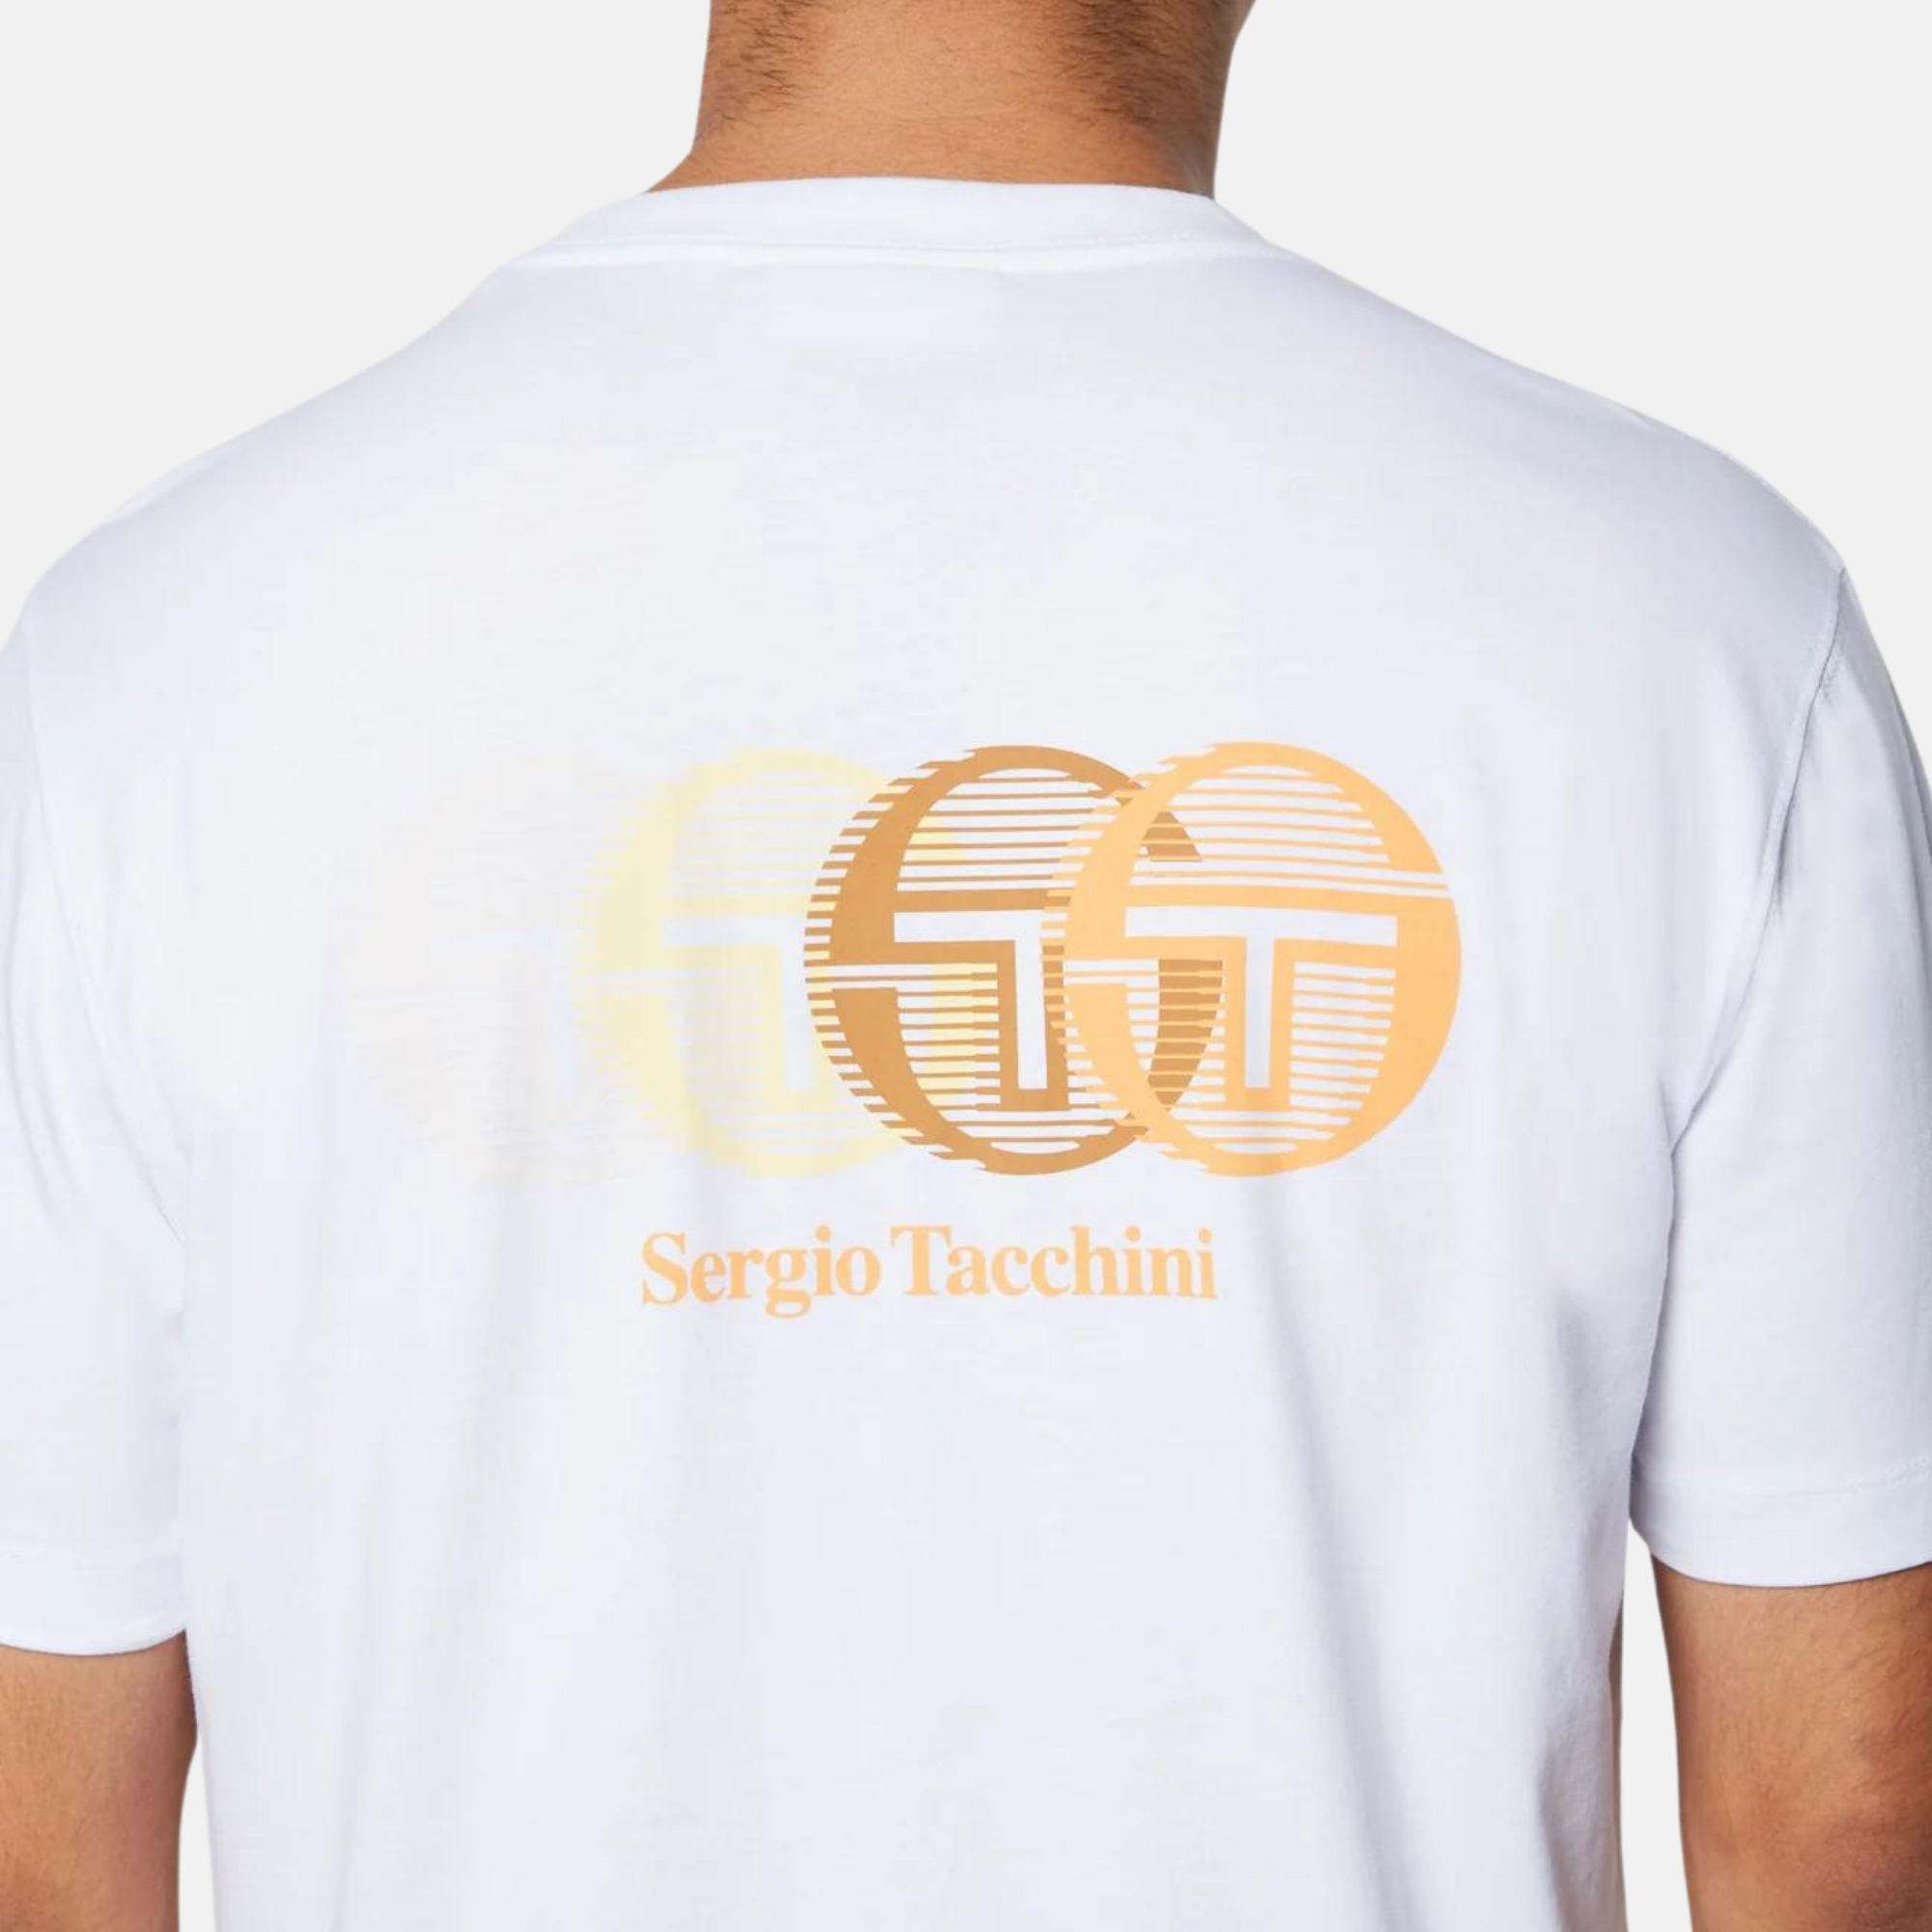 Sergio Tacchini Tenda White T-Shirt